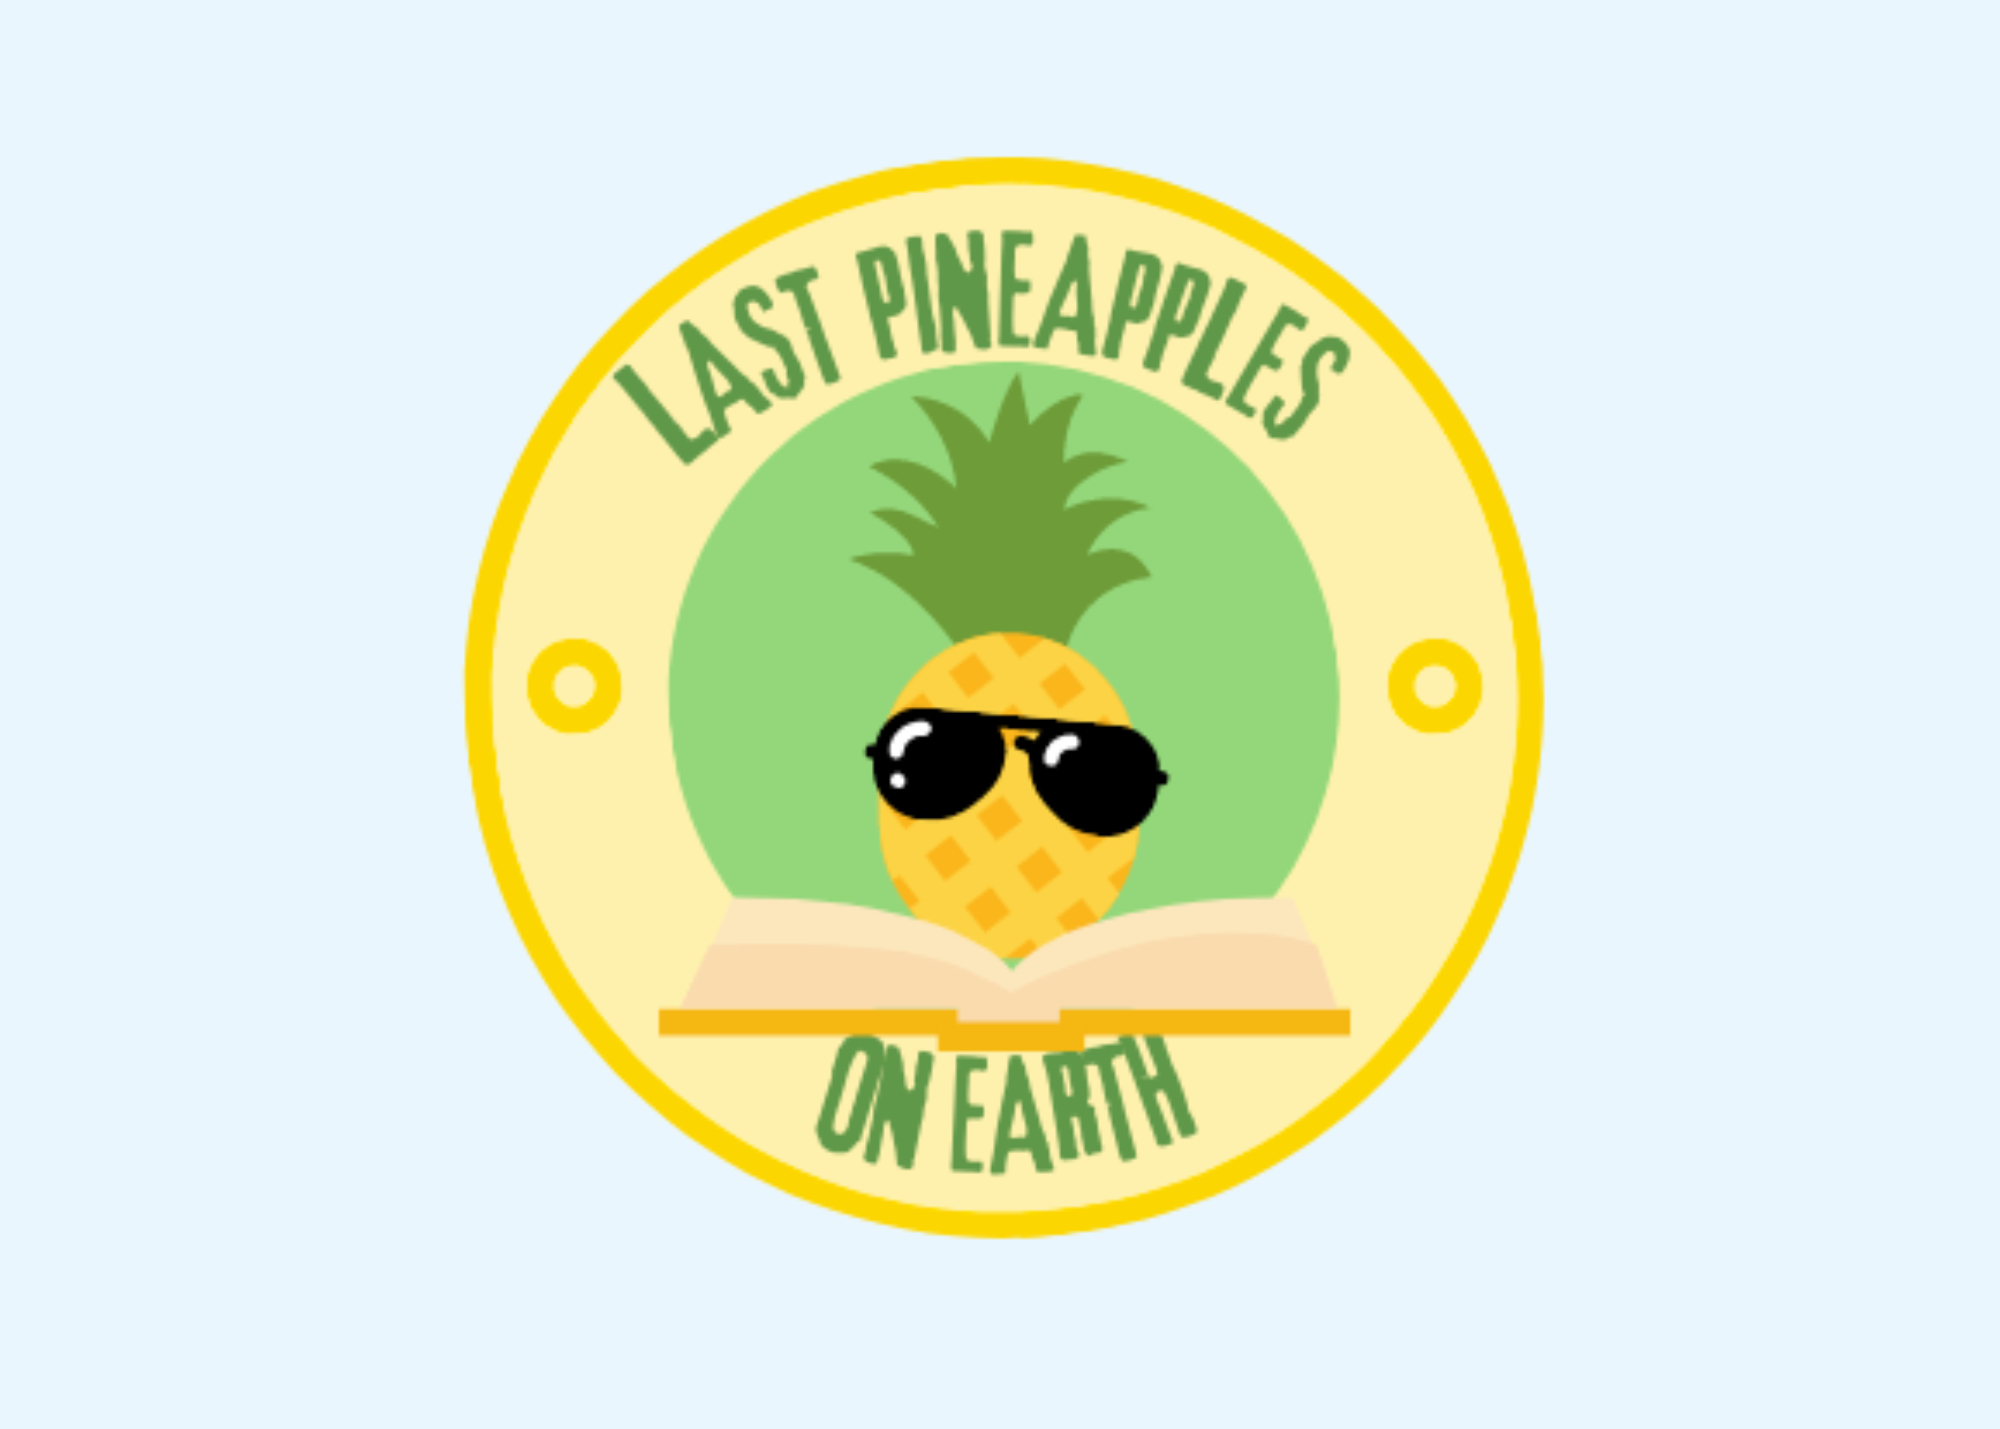 Last Pineapples on Earth logo